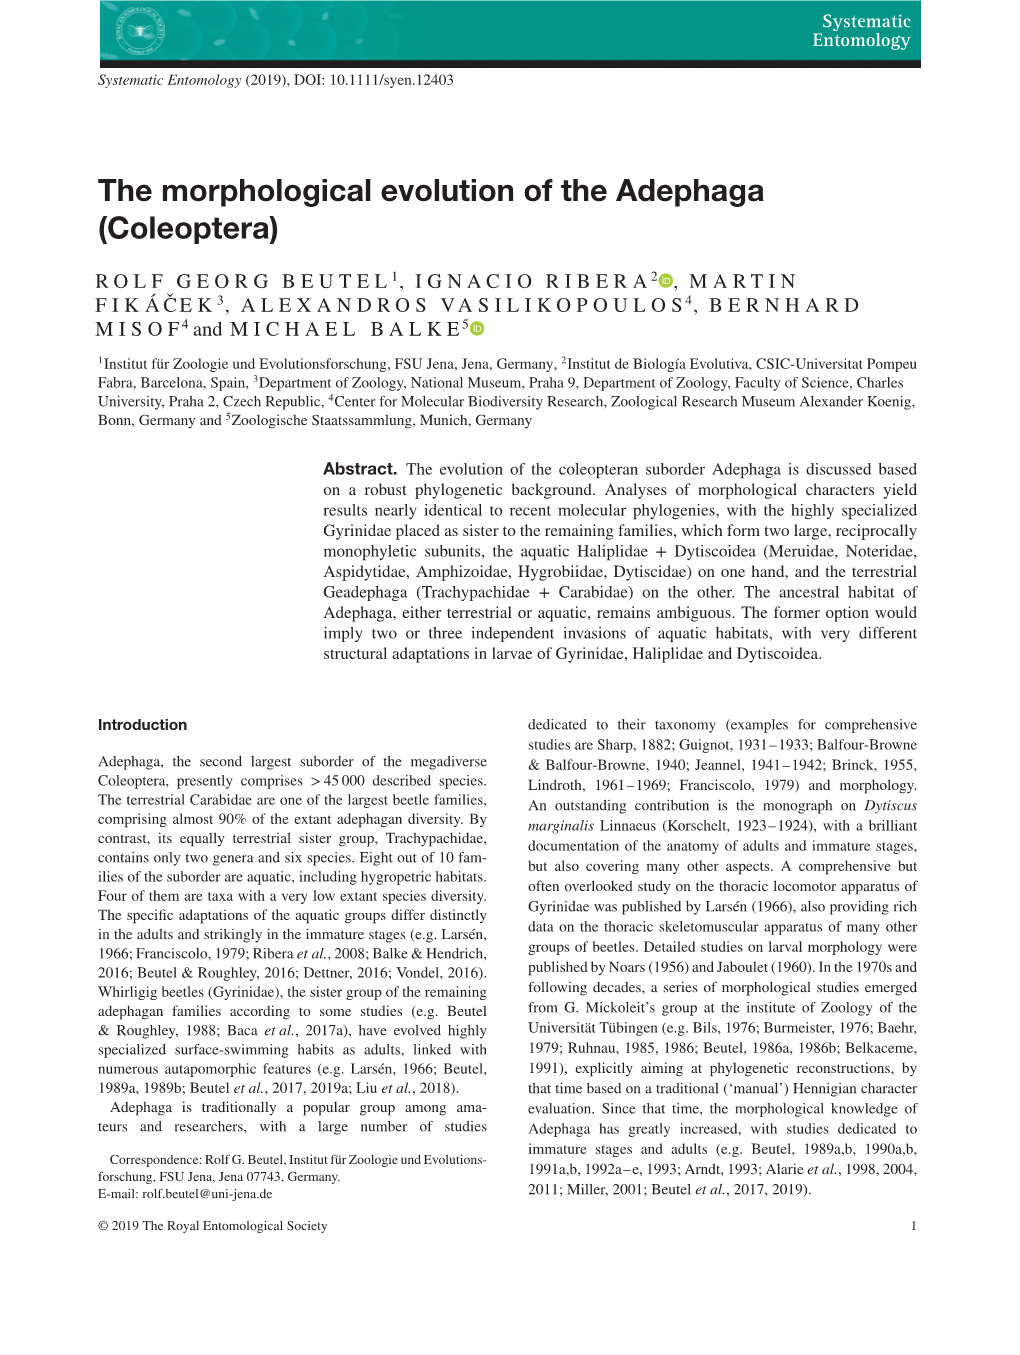 The Morphological Evolution of the Adephaga (Coleoptera)